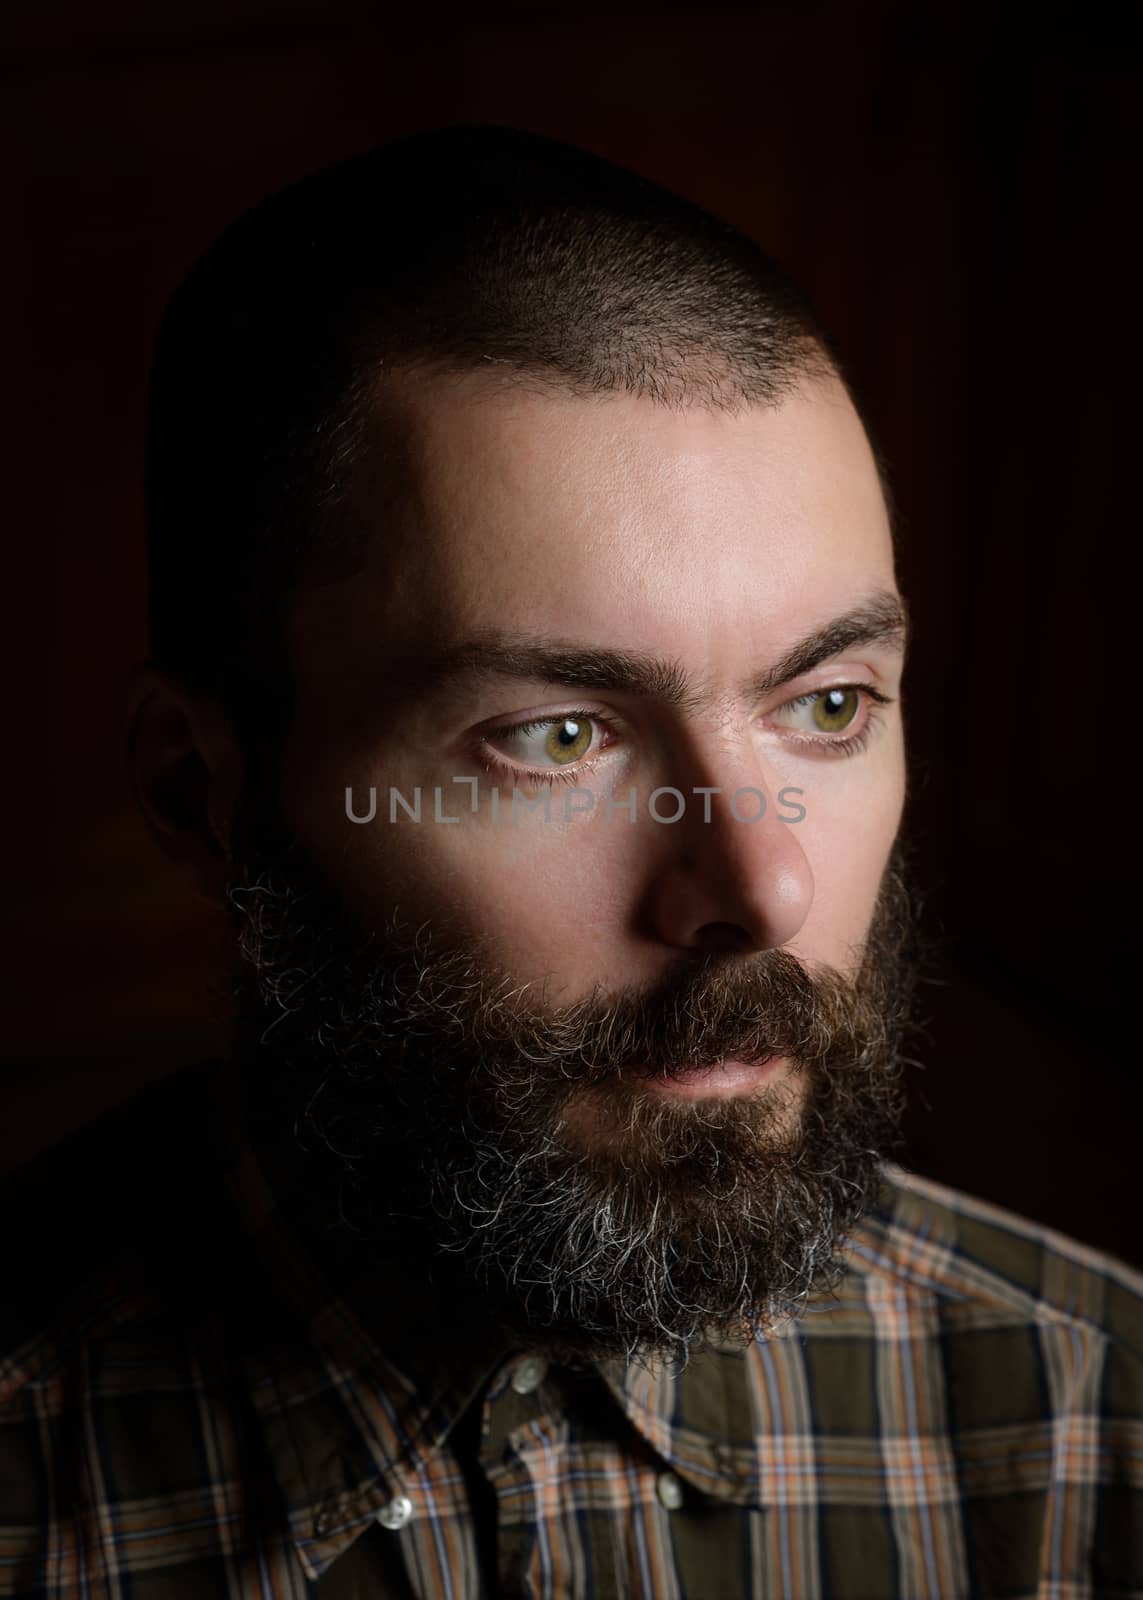 Portrait of a bearded man wearing a plaid shirt